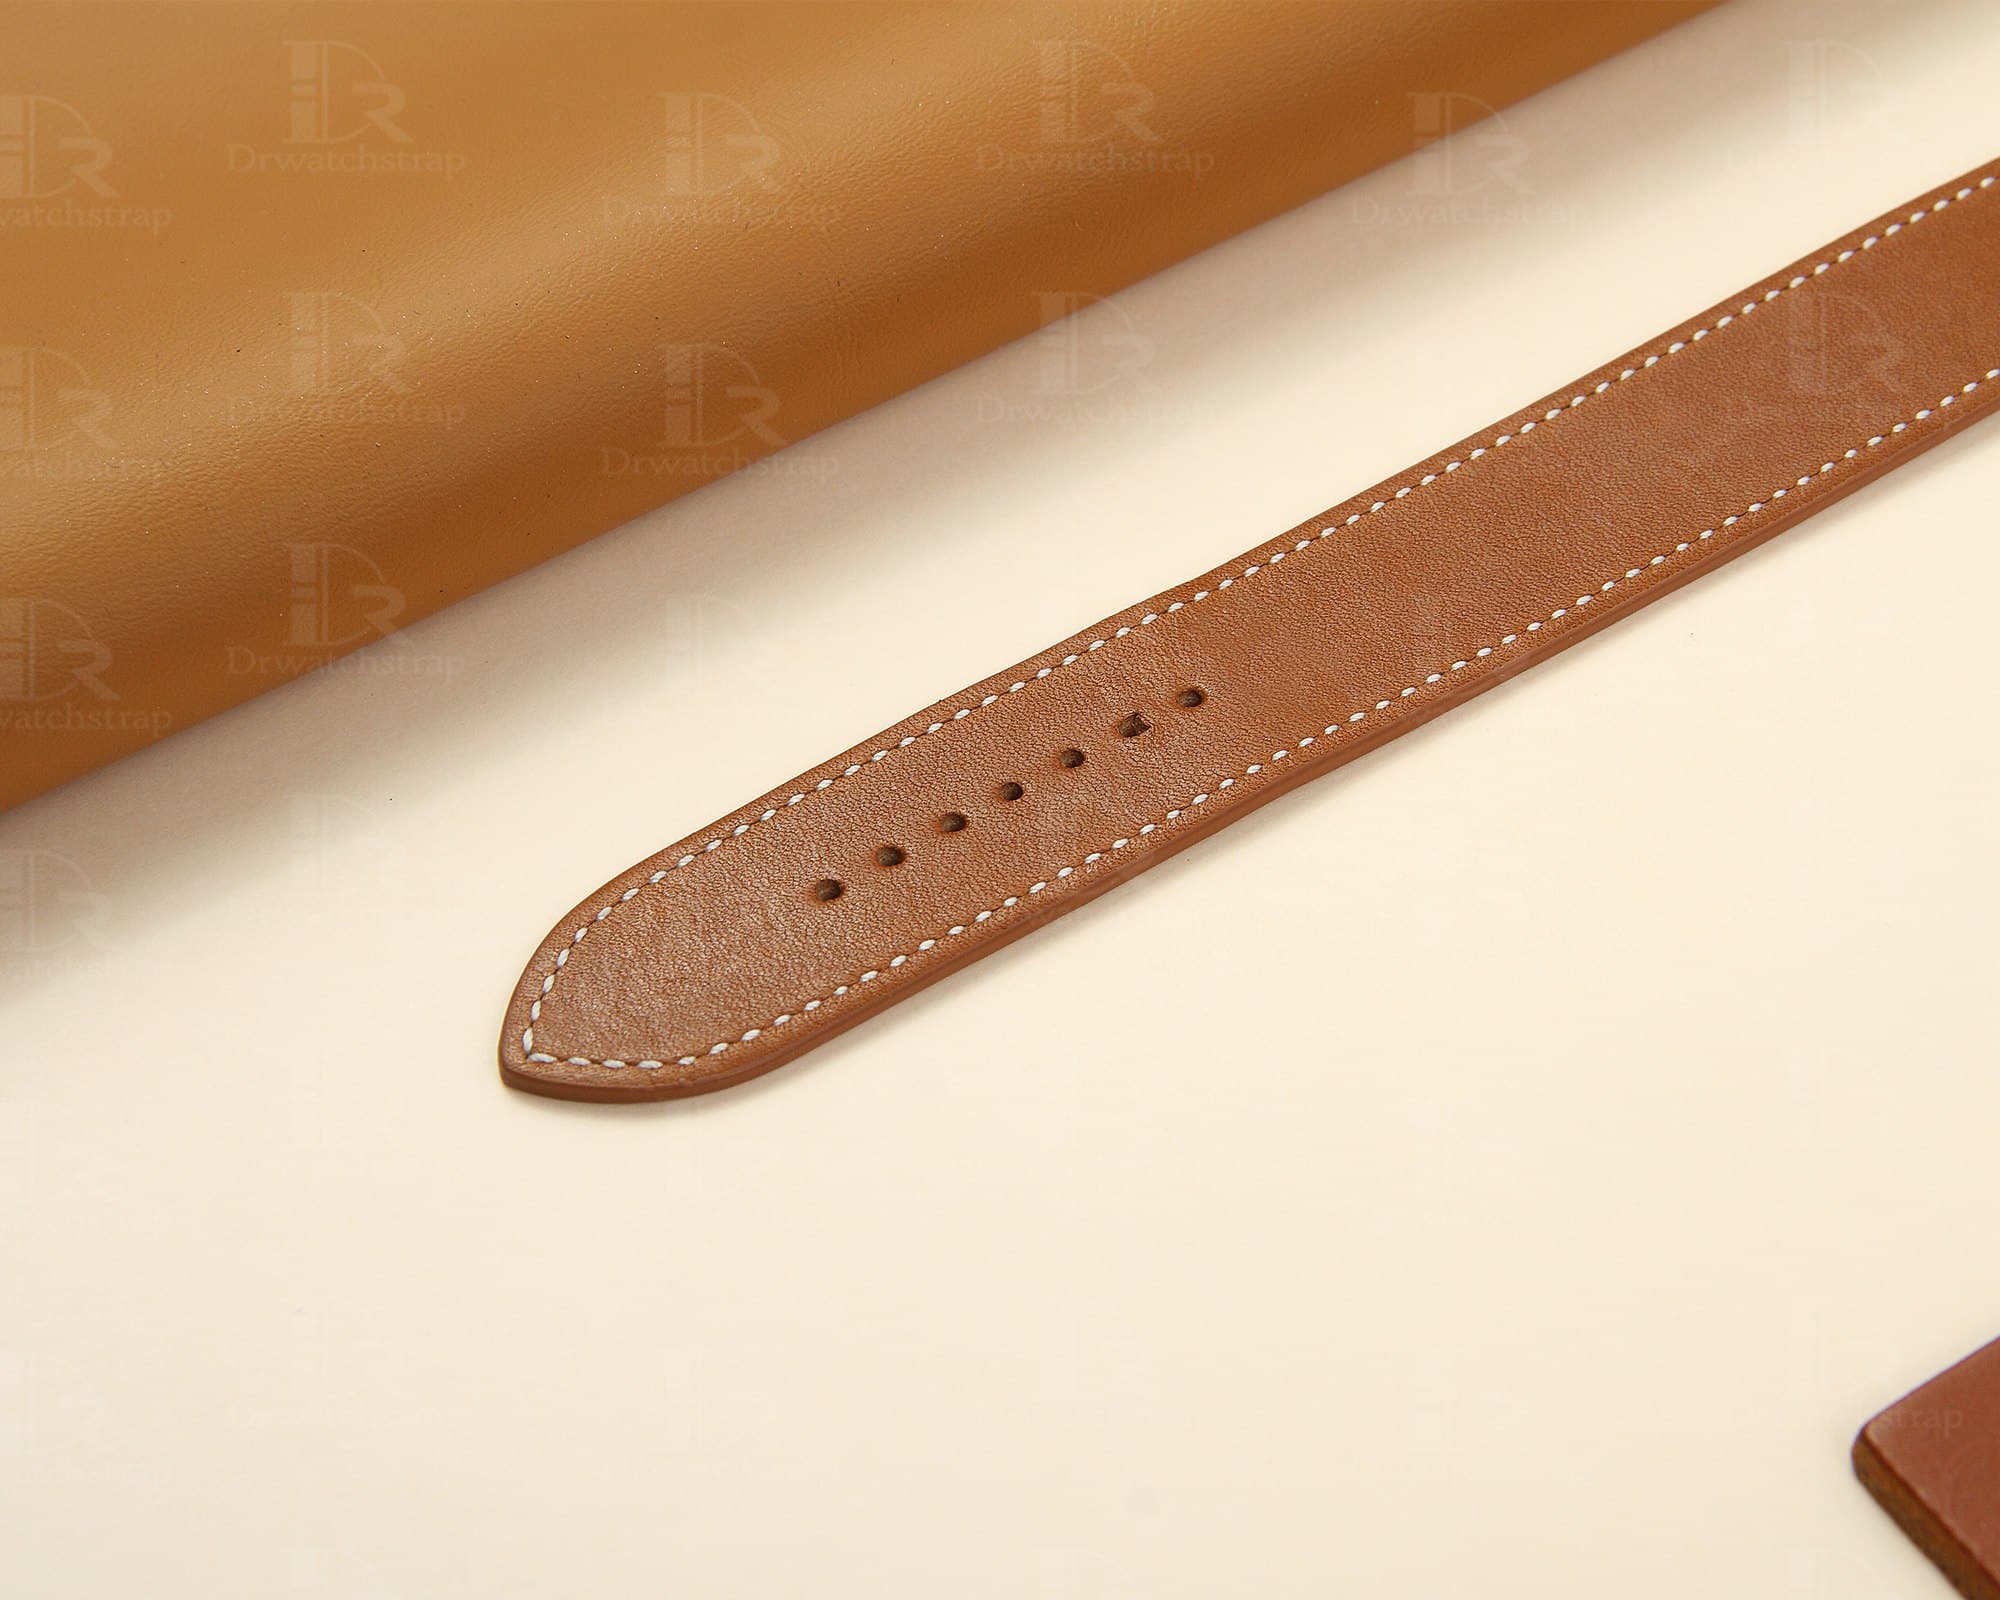 double wrap handmade brown leather watch strap oem apple watch